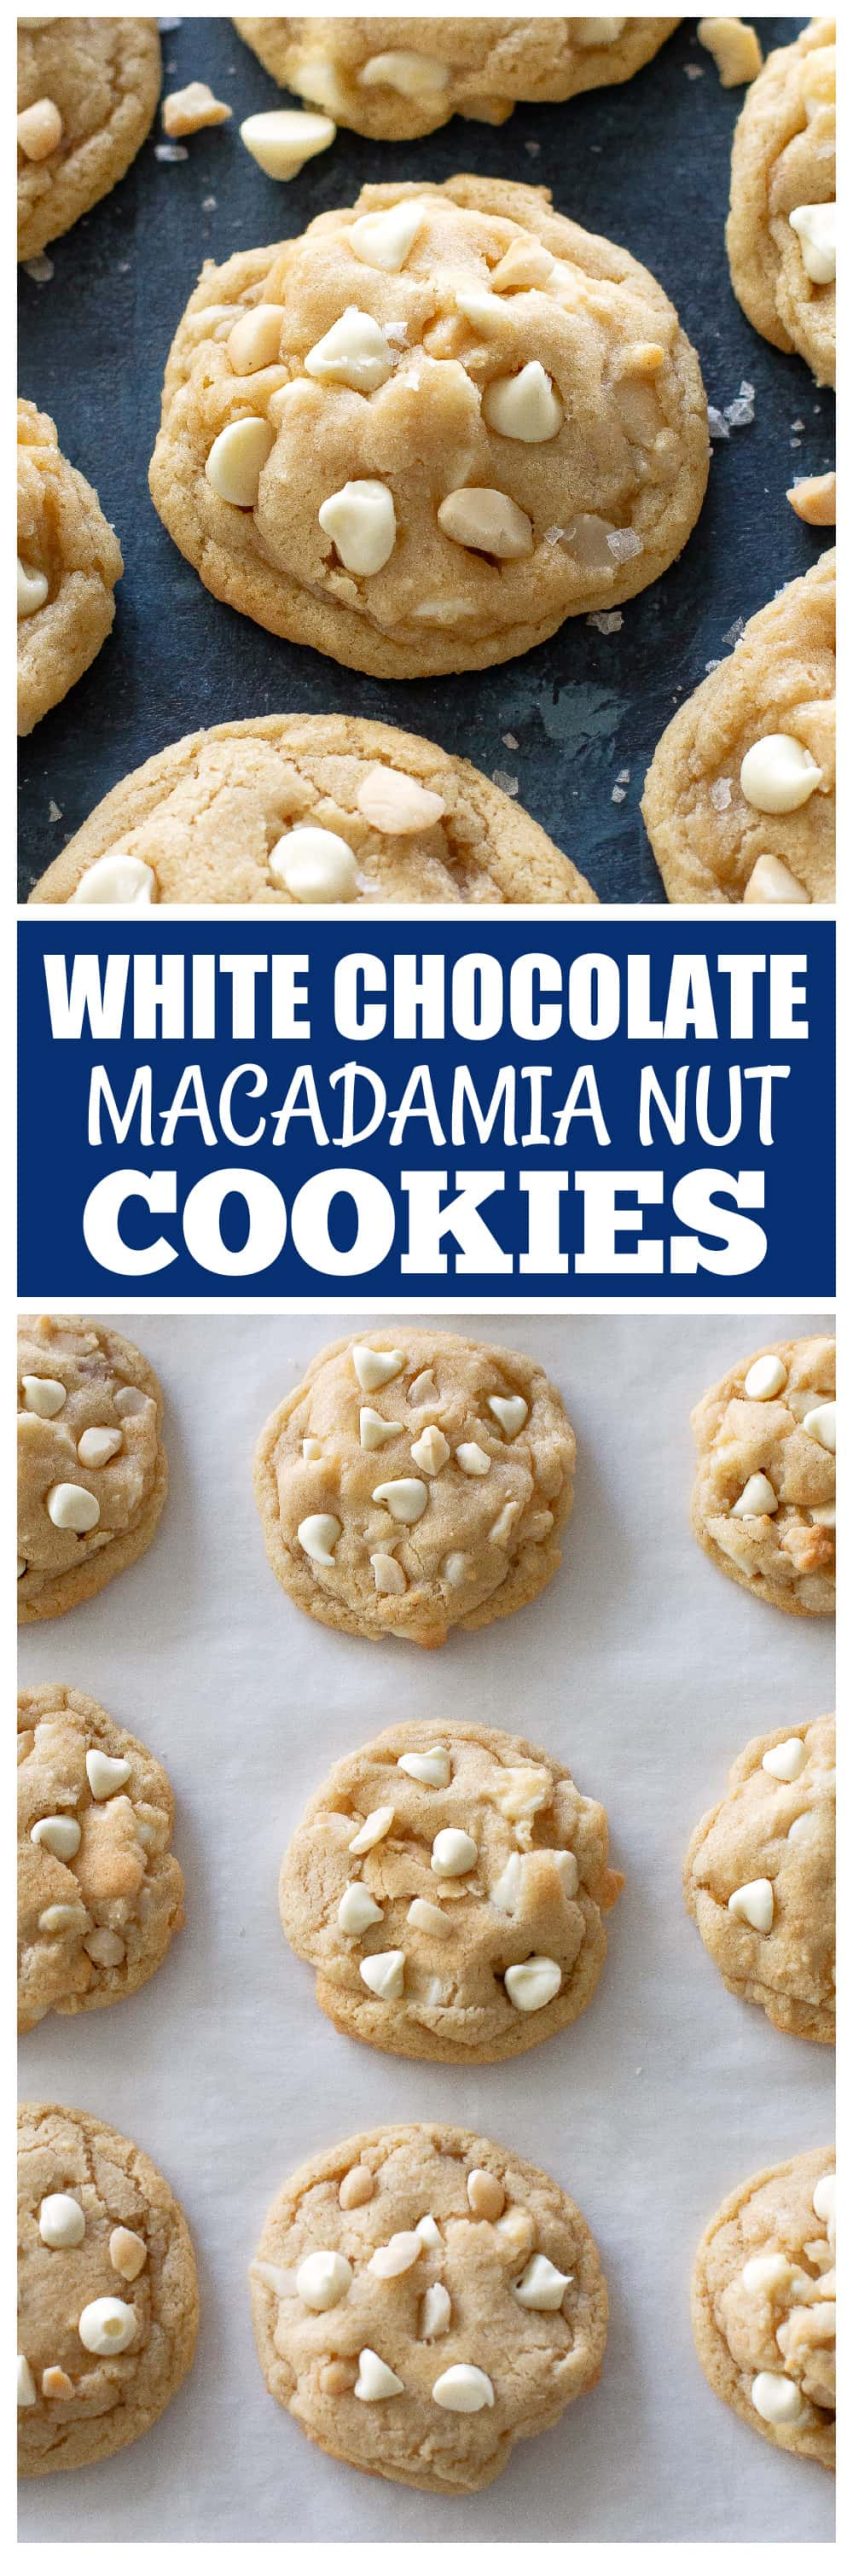 white chocolate macadamia nut cookies scaled - White Chocolate Macadamia Nut Cookies